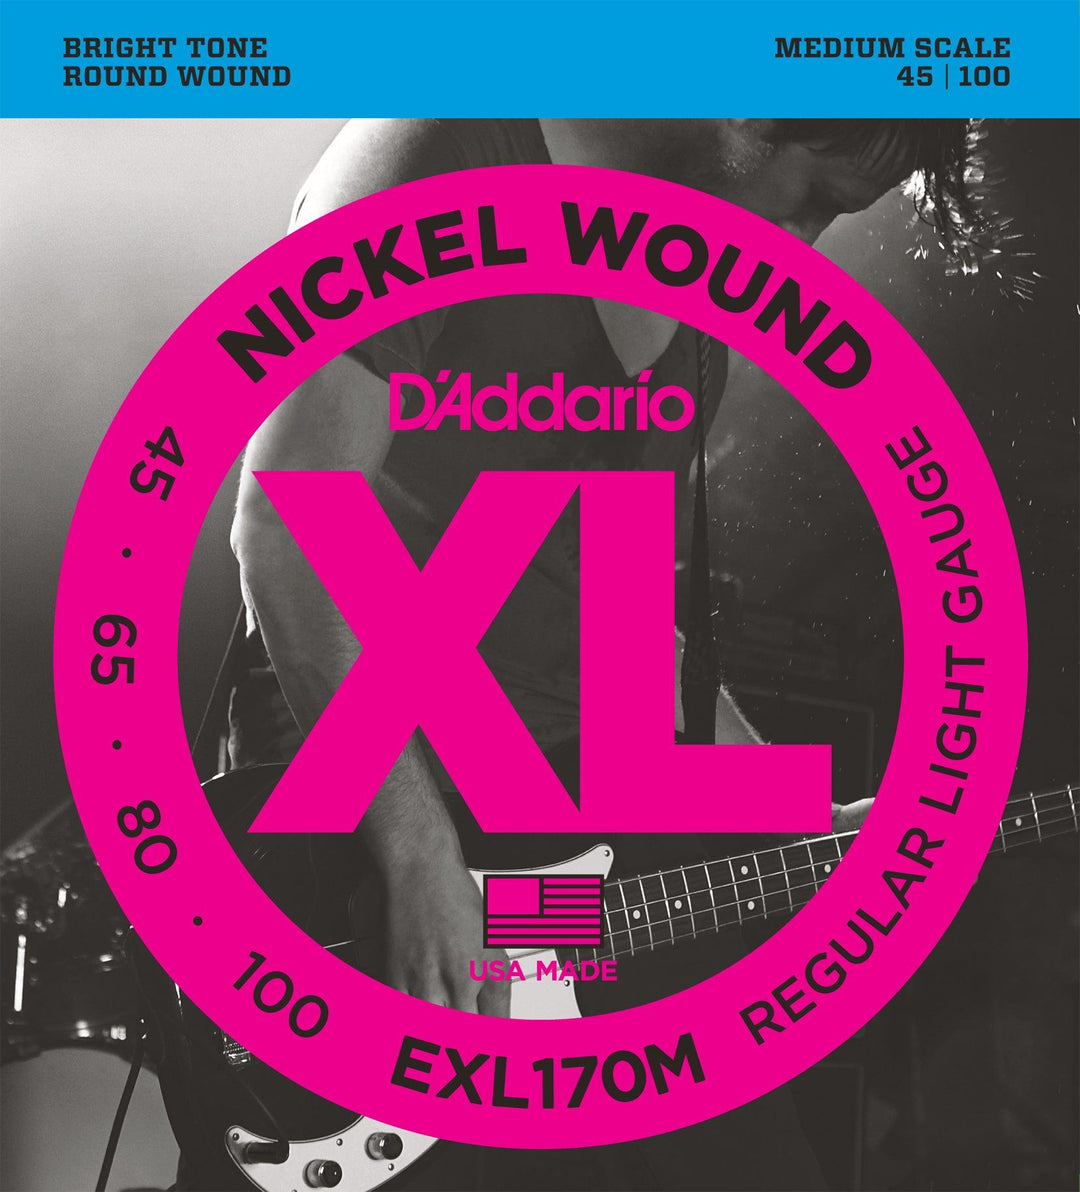 D'Addario XL Bass Guitar String Set, Nickel, EXL170M Light .045-.100, Medium Scale - A Strings